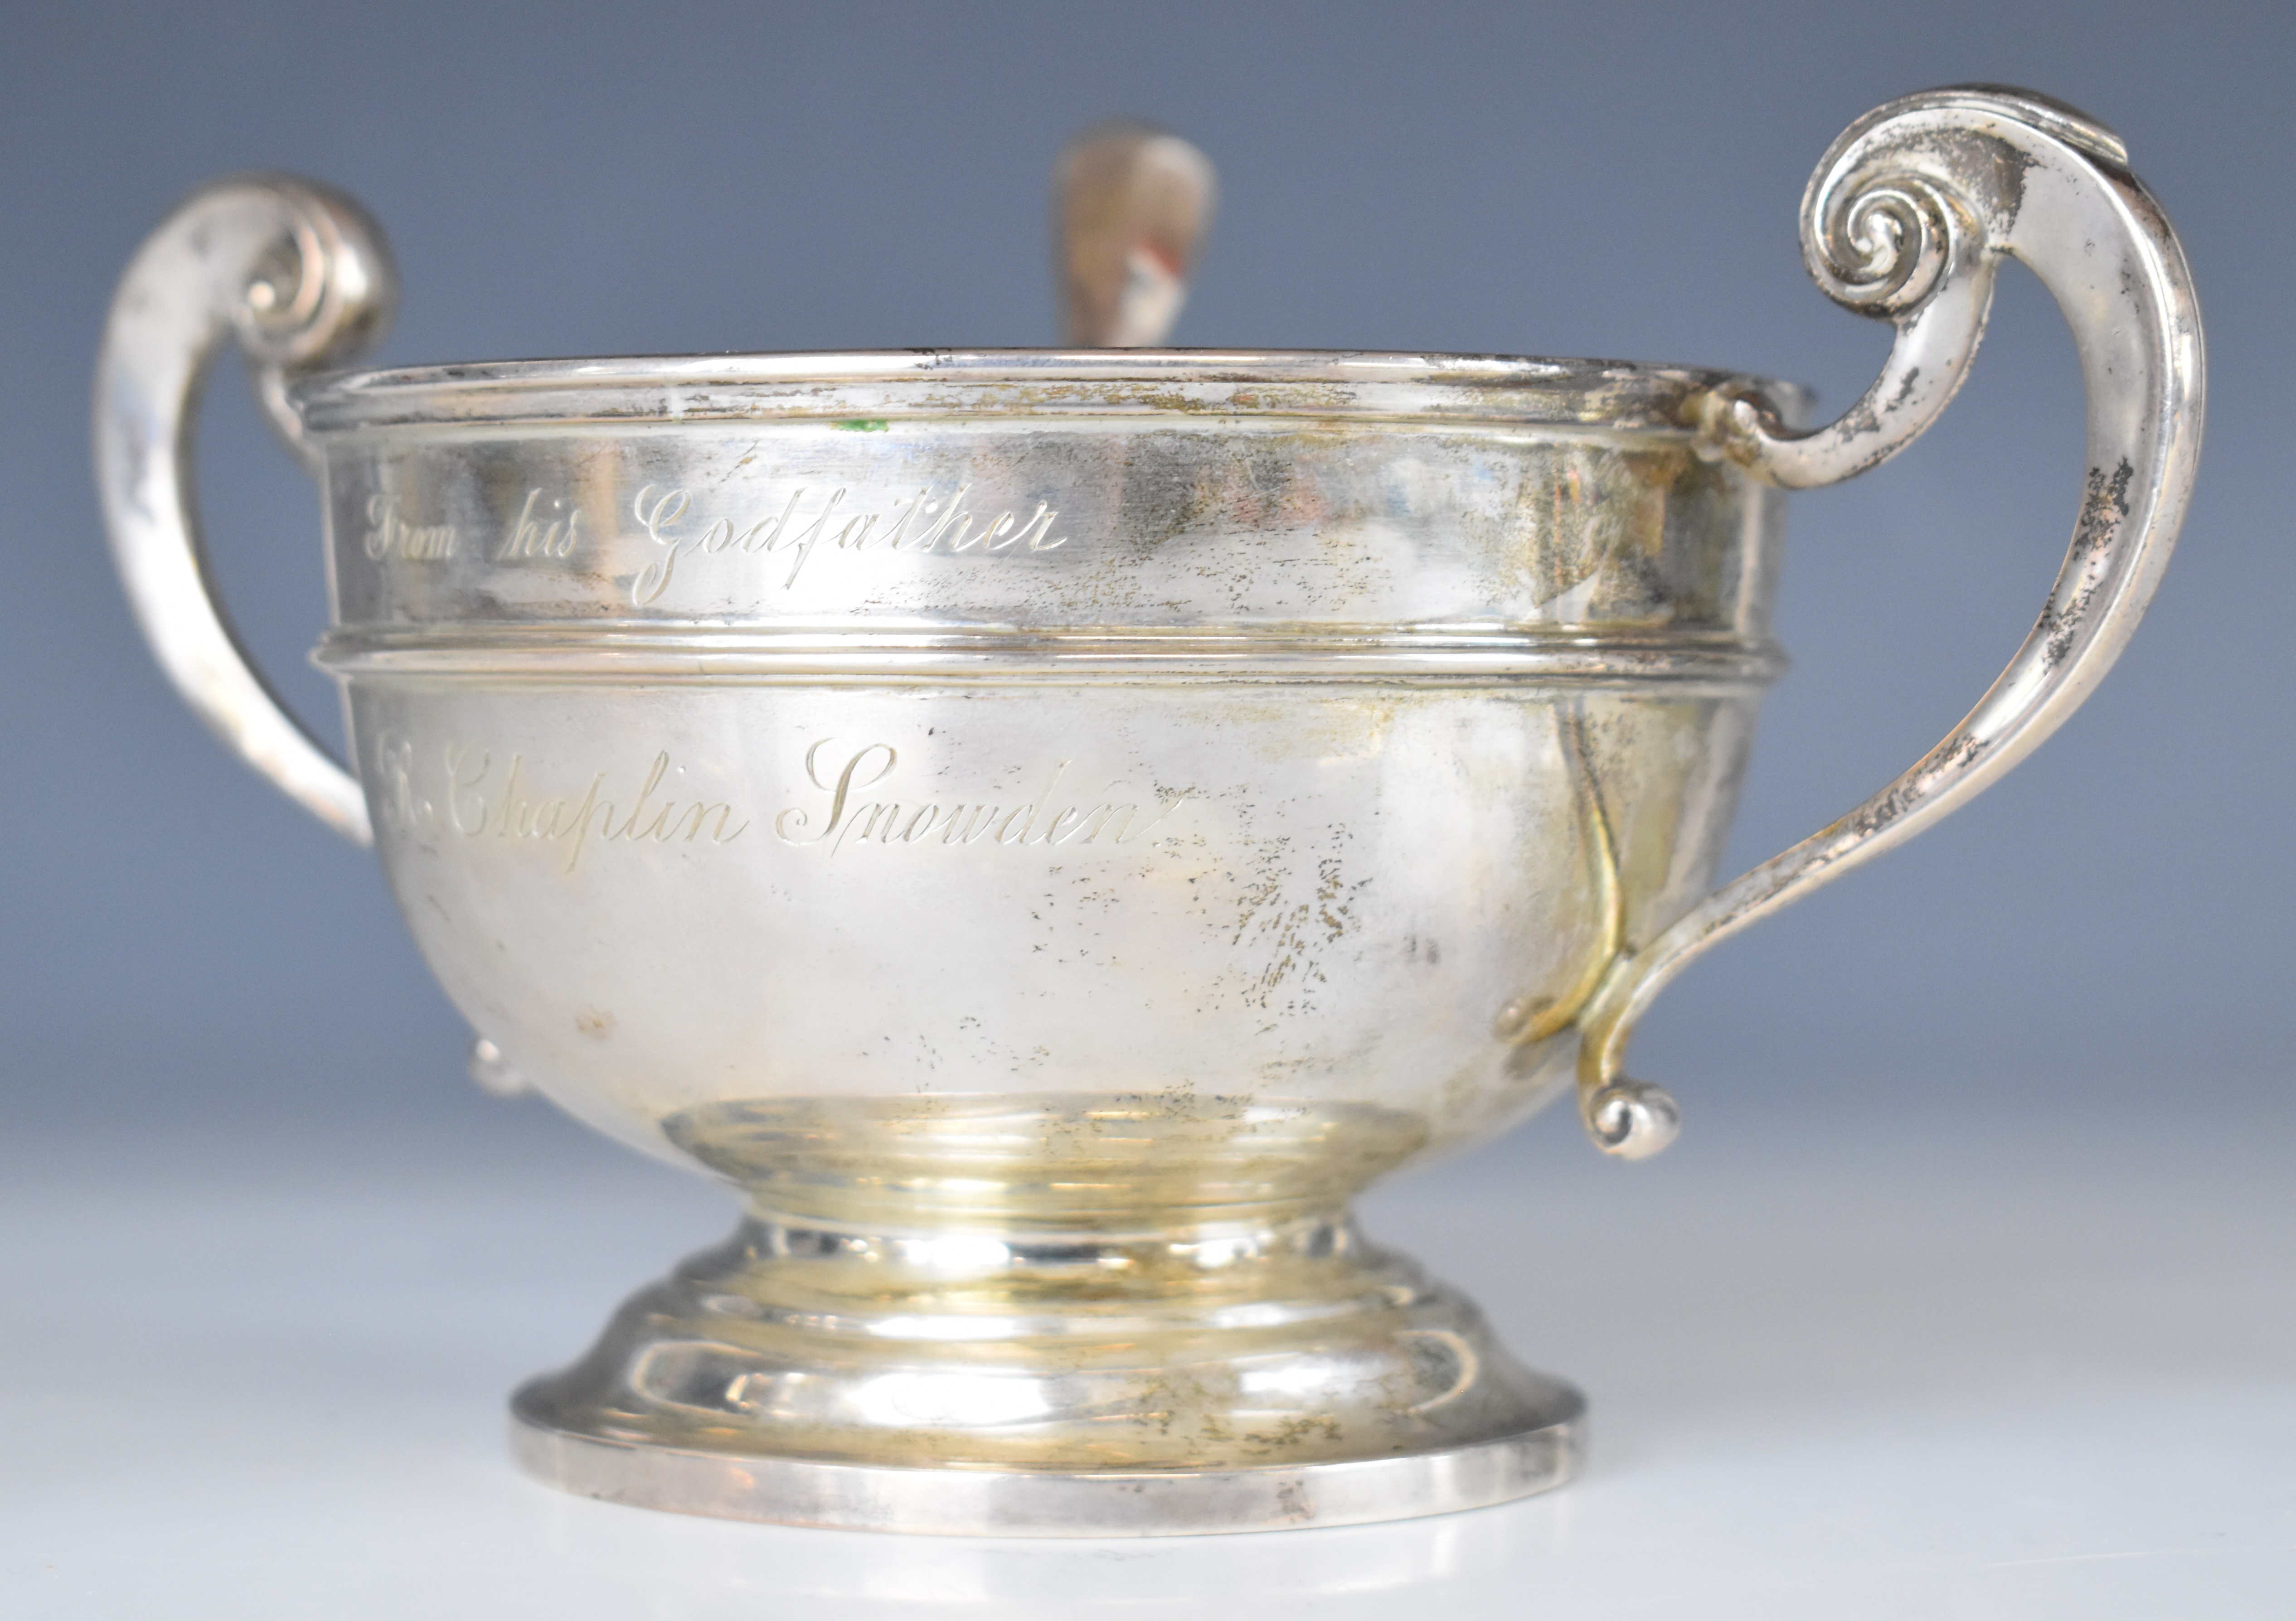 Edward VII hallmarked silver twin handled handled sugar or similar bowl and matching Hanoverian - Image 4 of 5